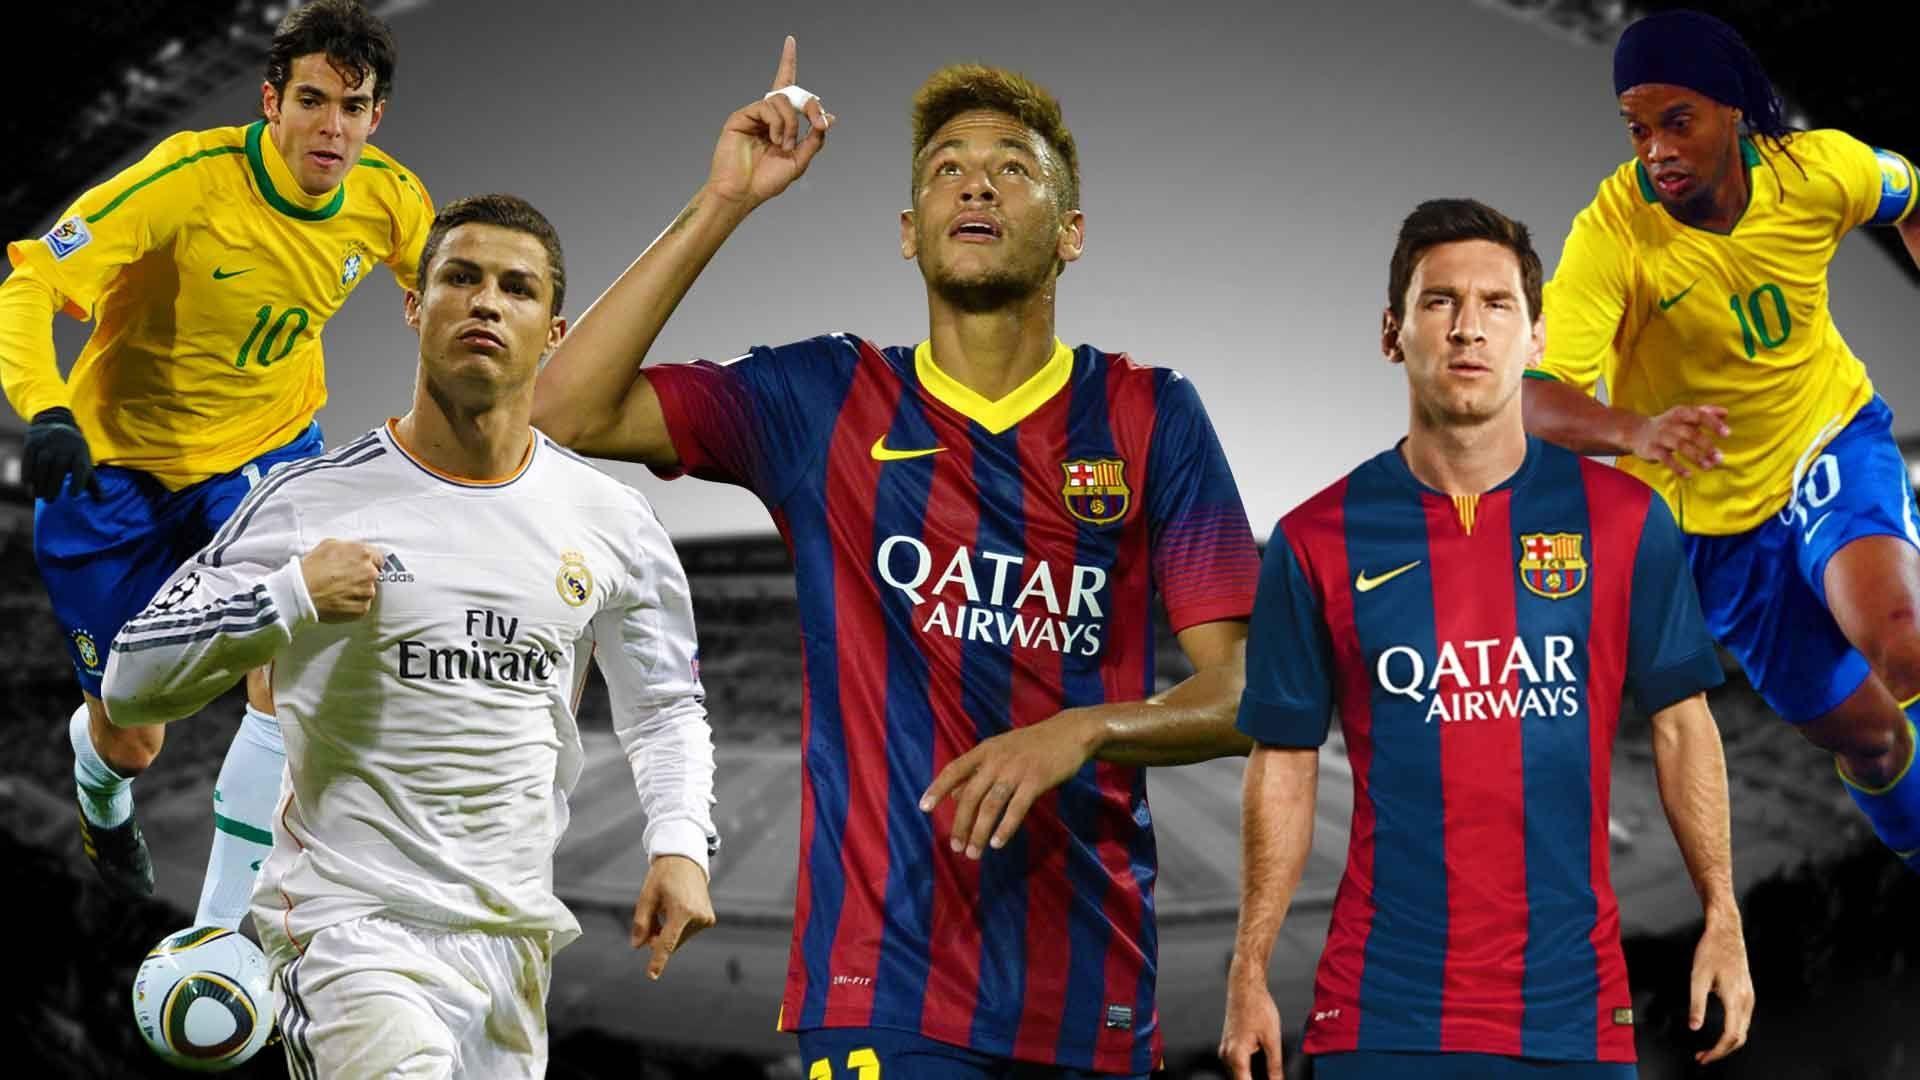 Cristiano Ronaldo Vs Messi 2014 Wallpaper High Quality Resolution